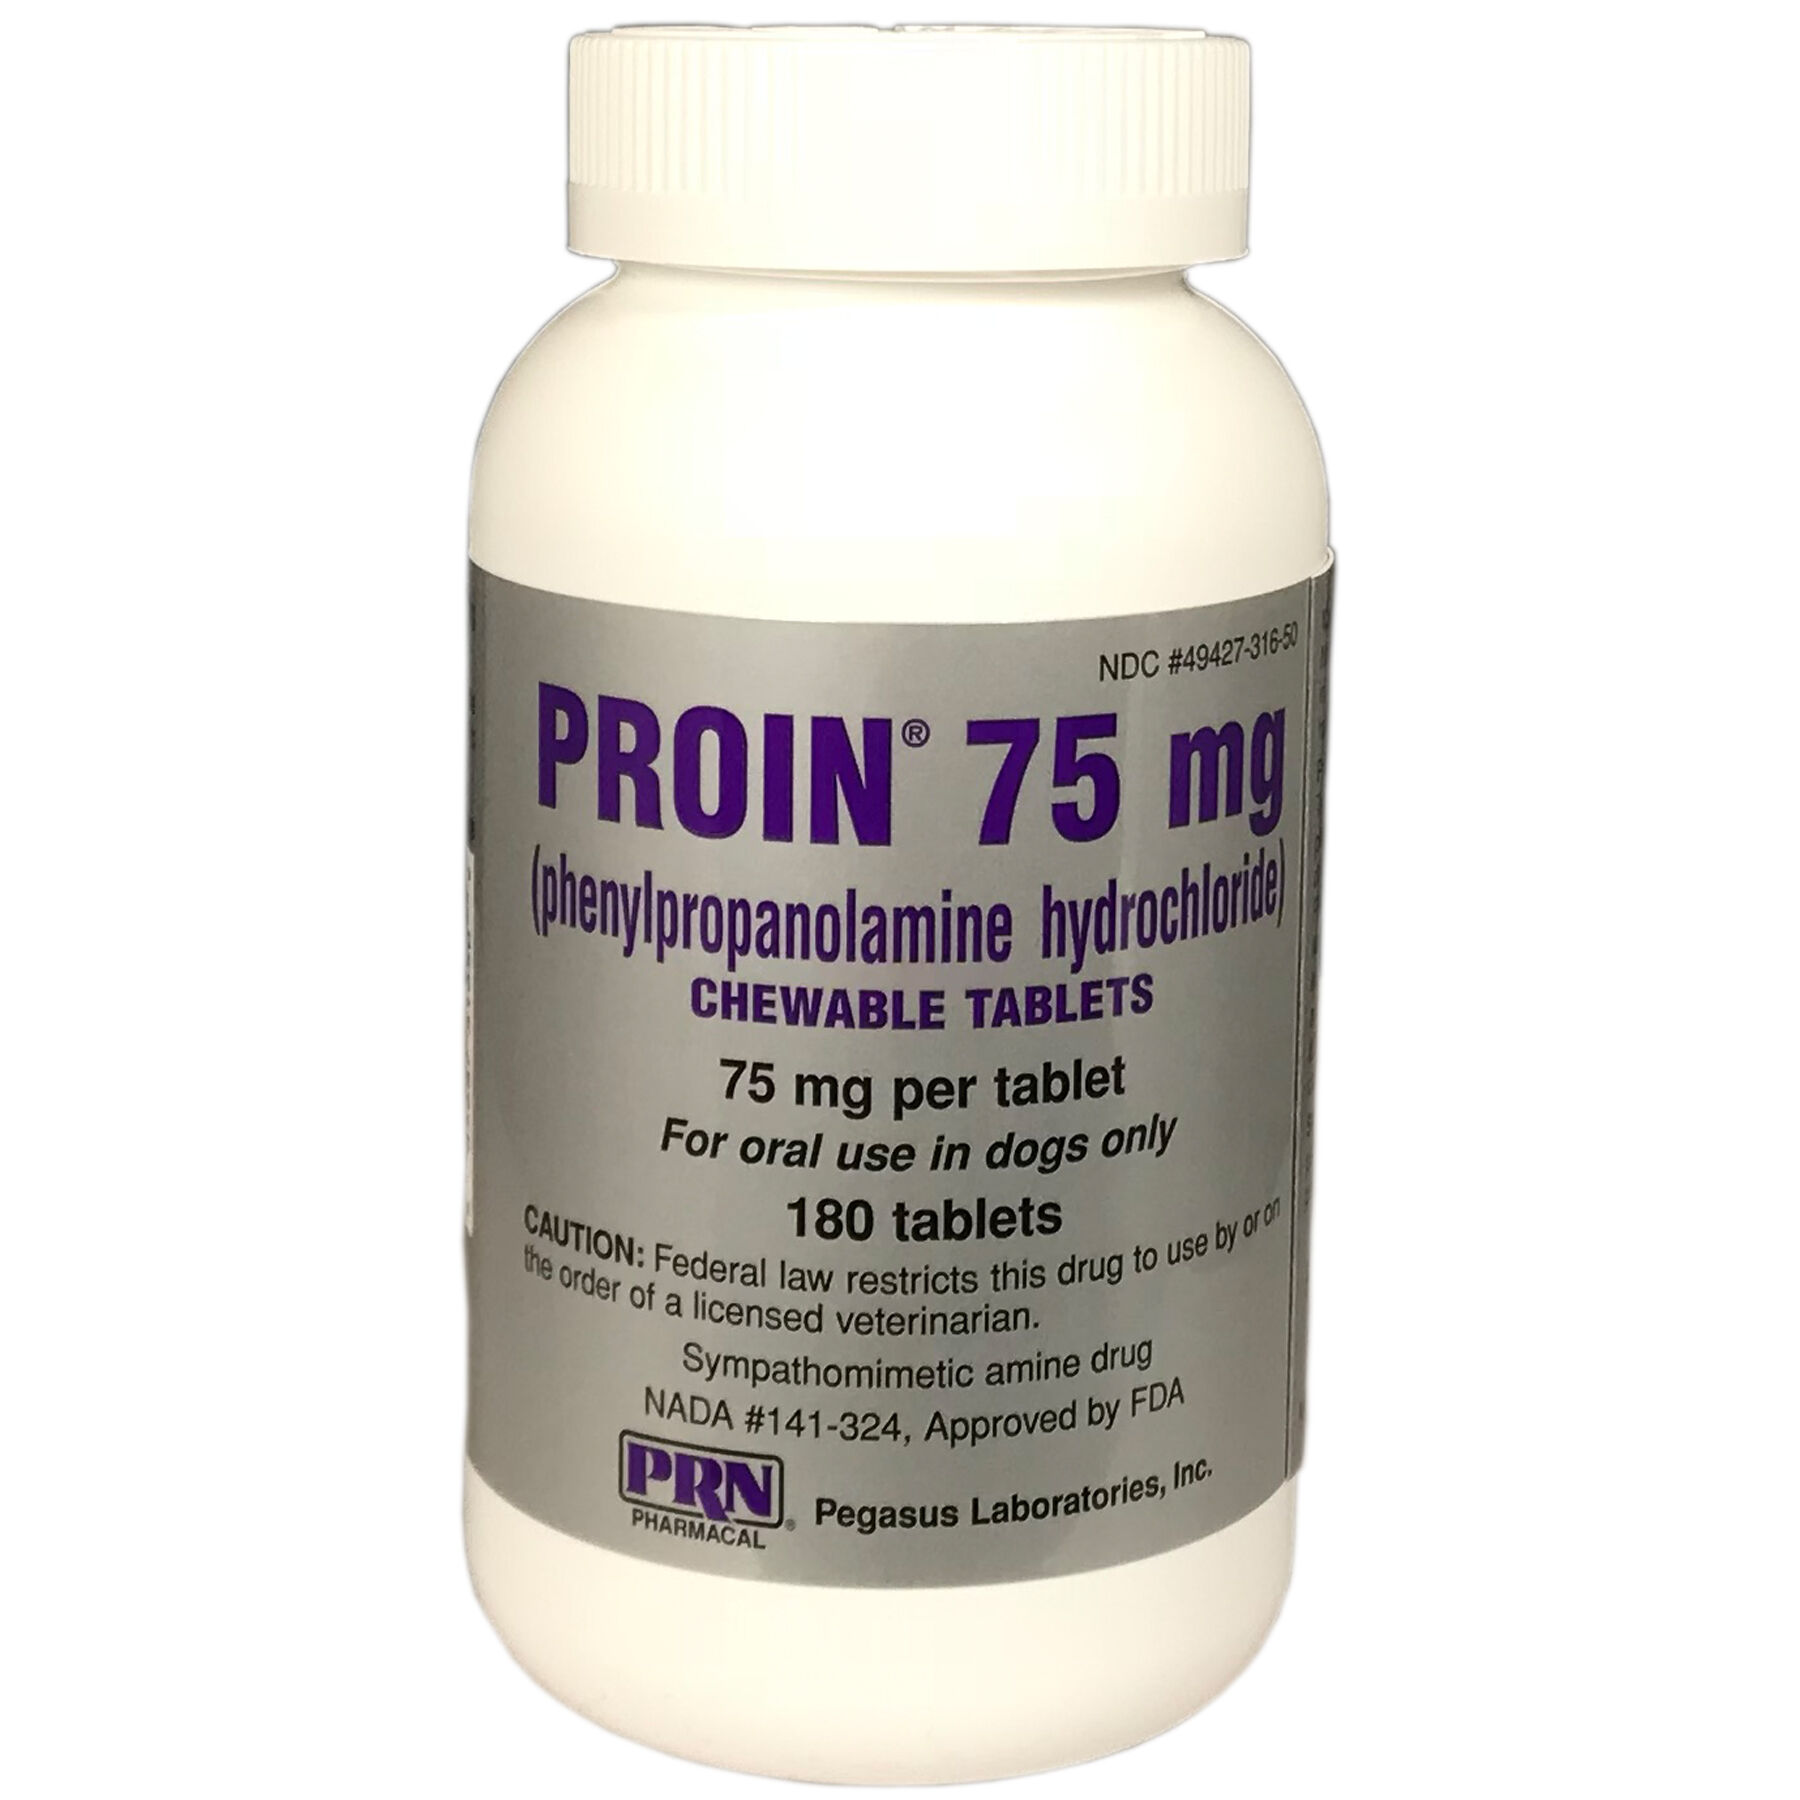 proin 50 mg side effects